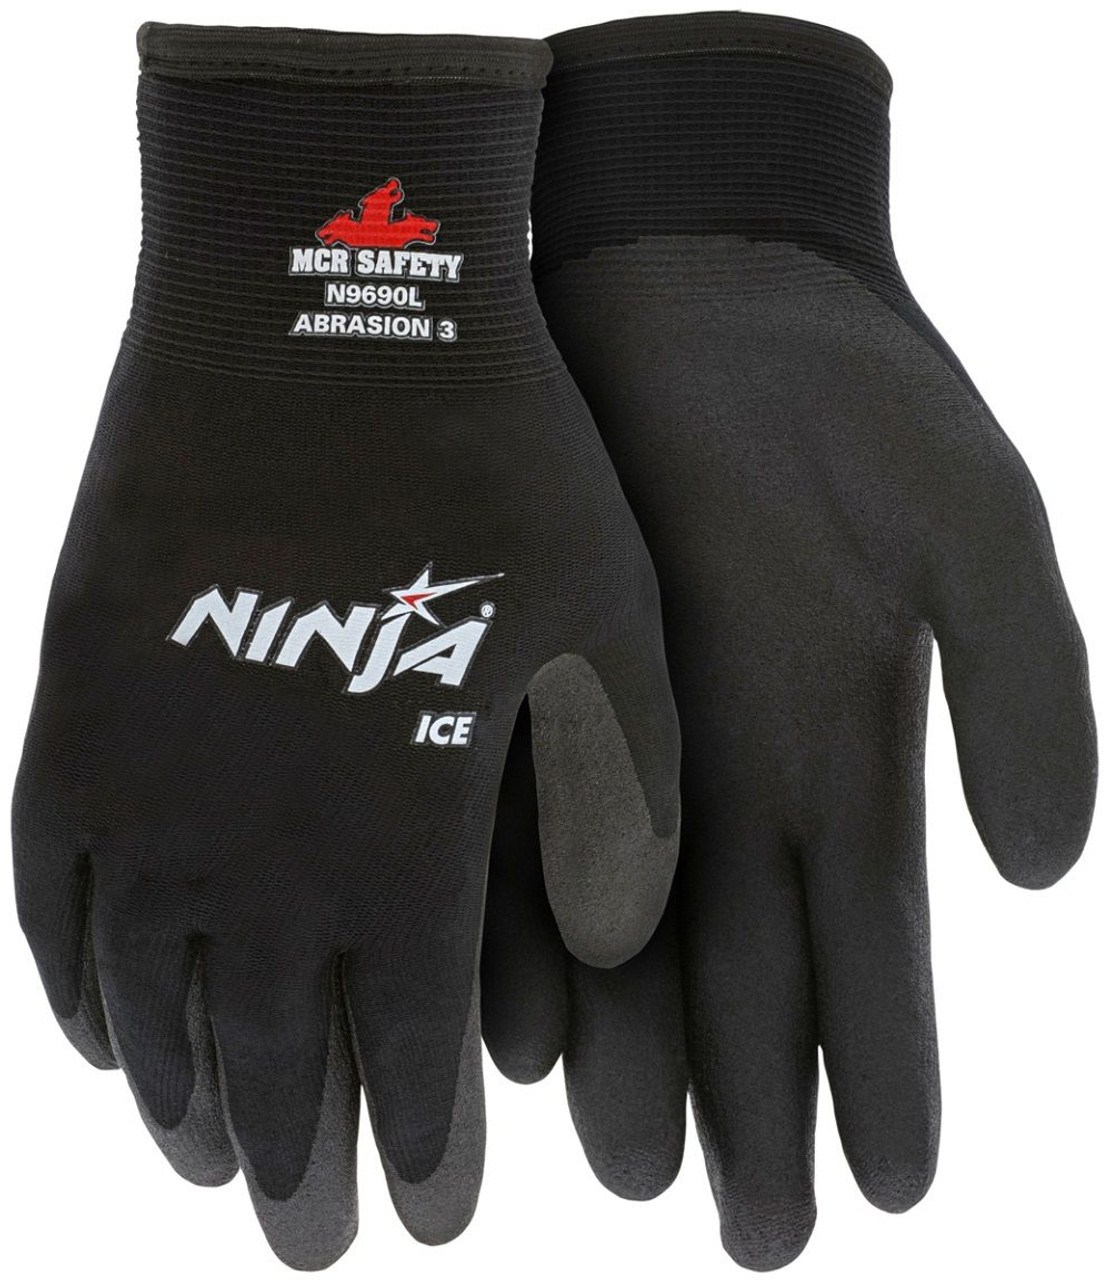 2 Pair Insulation Black Gloves Labor Protection Glove Low Voltage